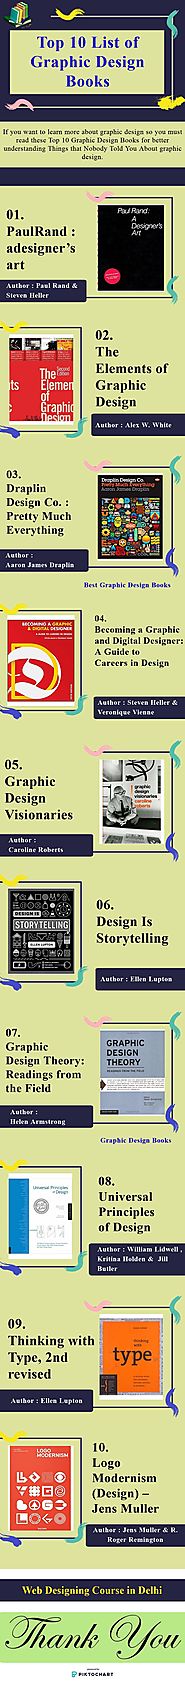 Graphic Design Books - Infographic